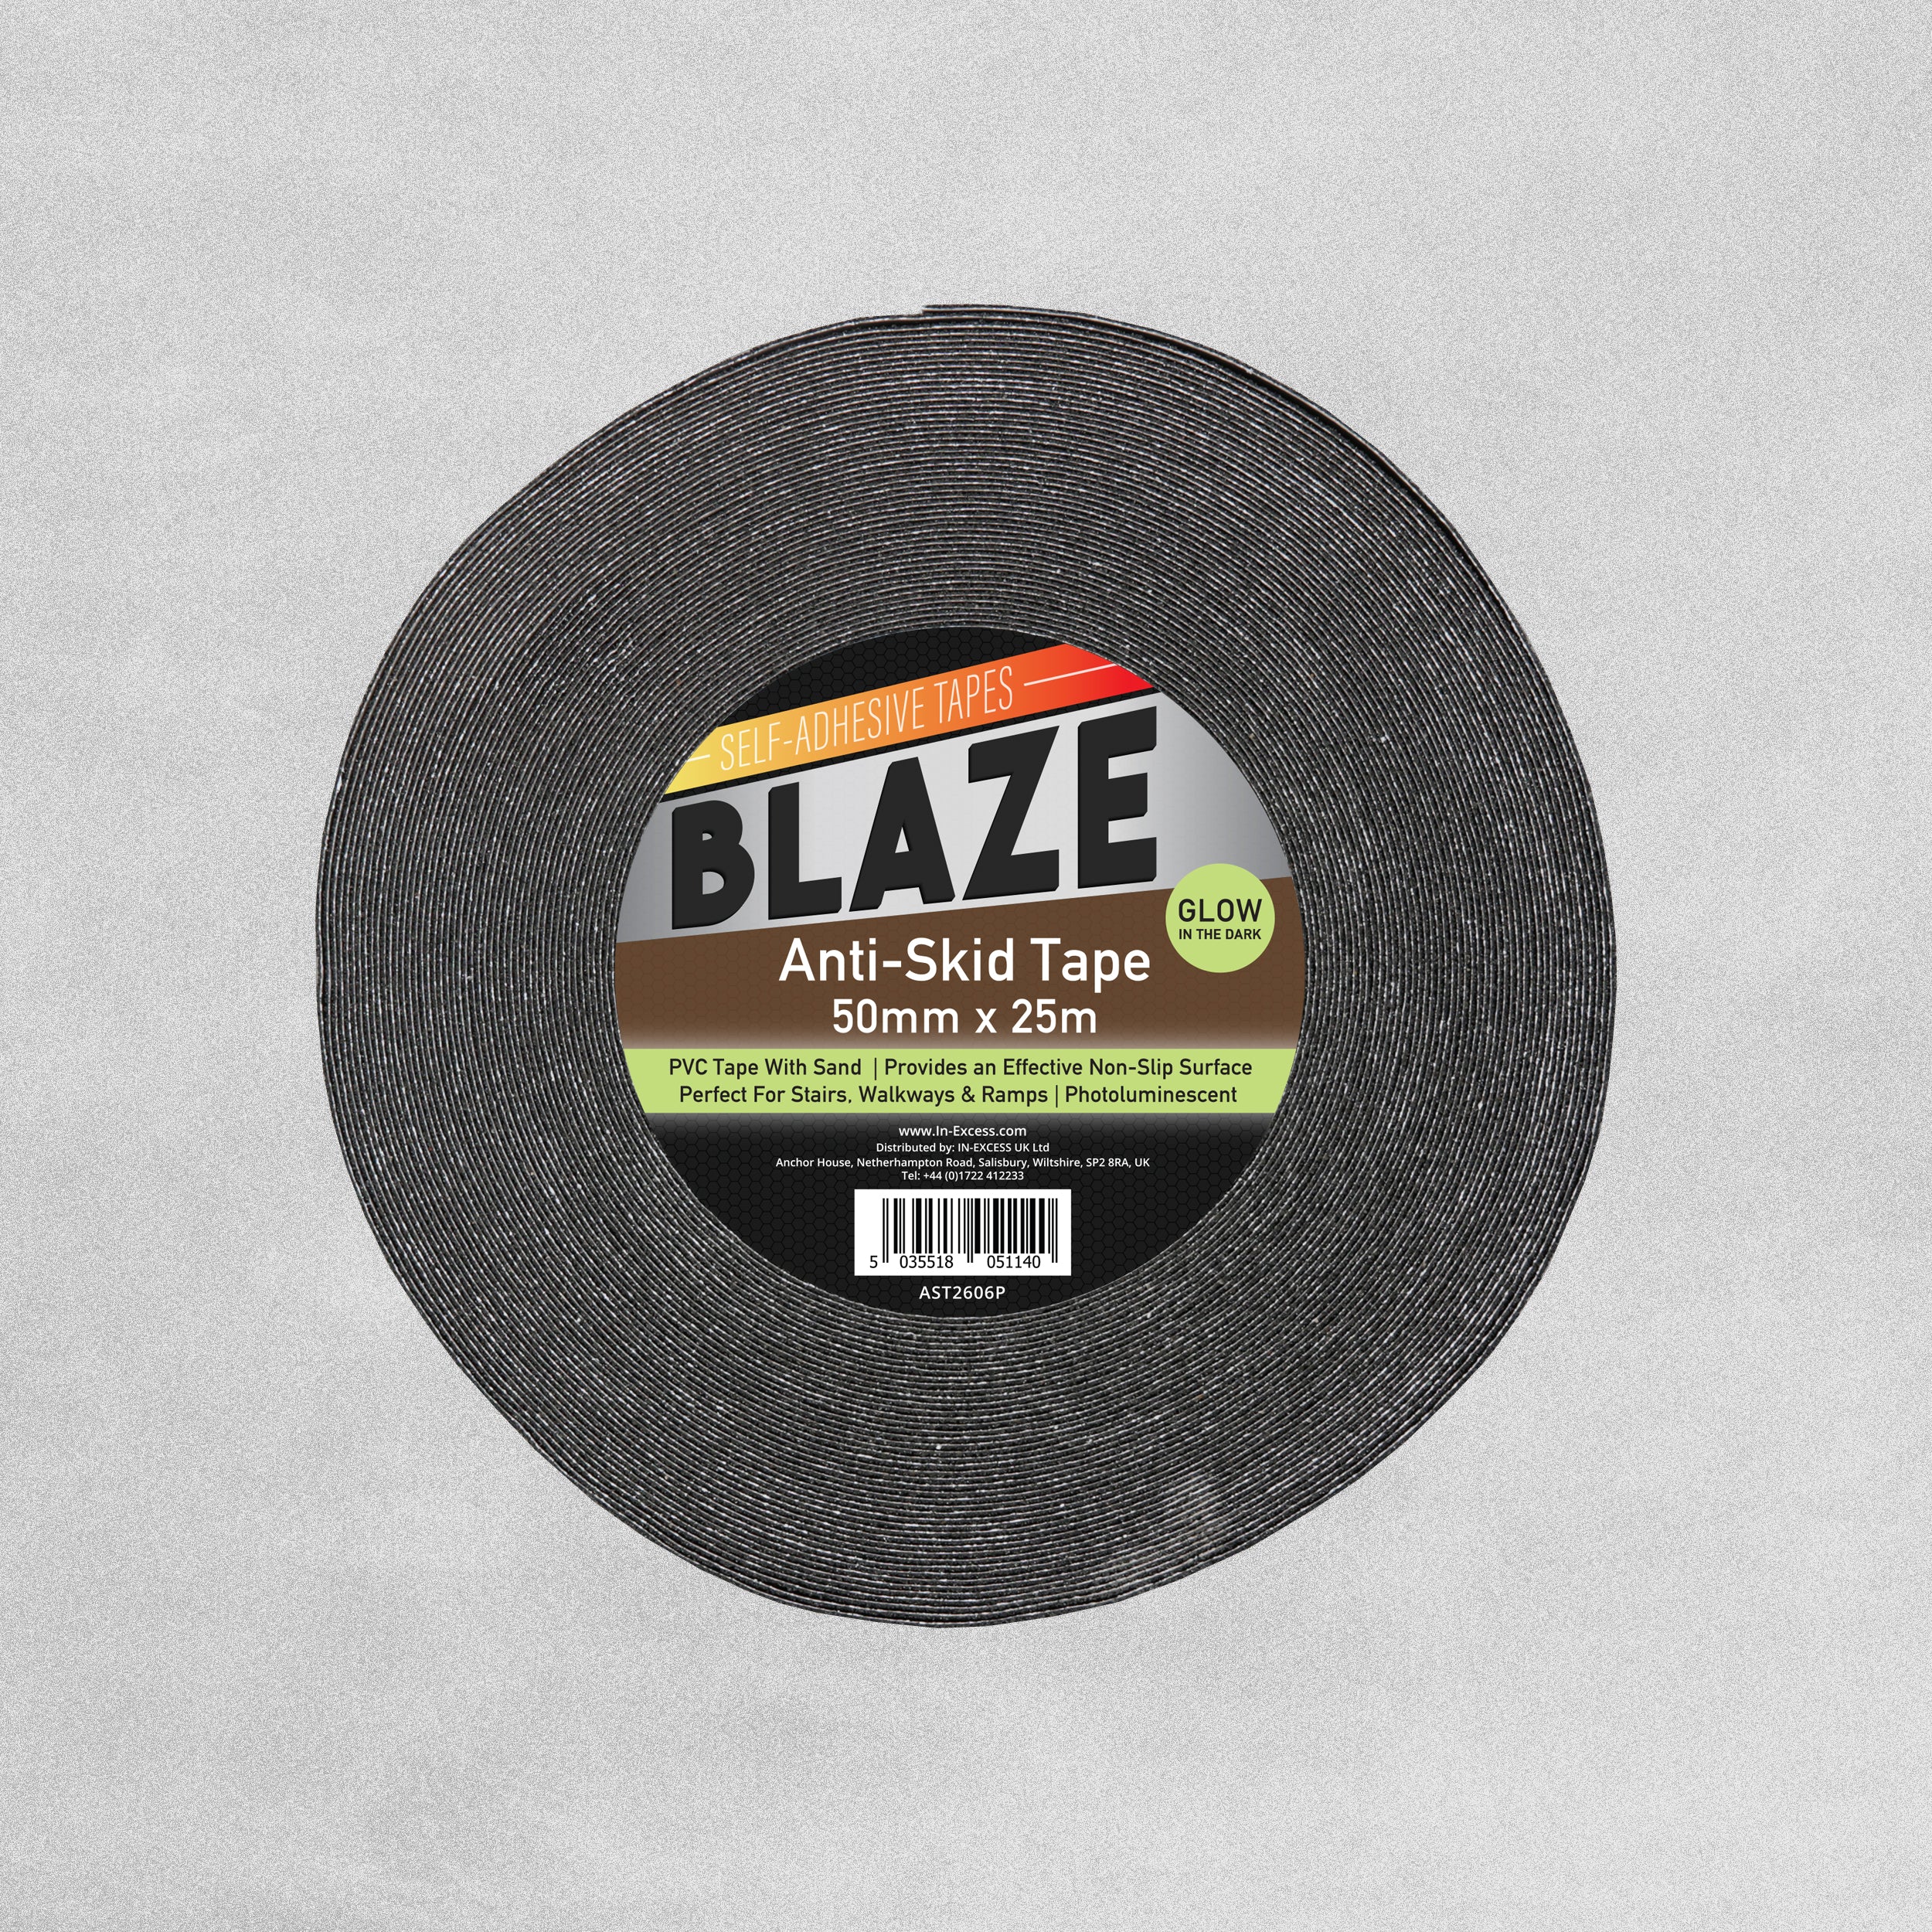 Blaze Anti-Skid Tape 50mm x 25m - Glow in the Dark